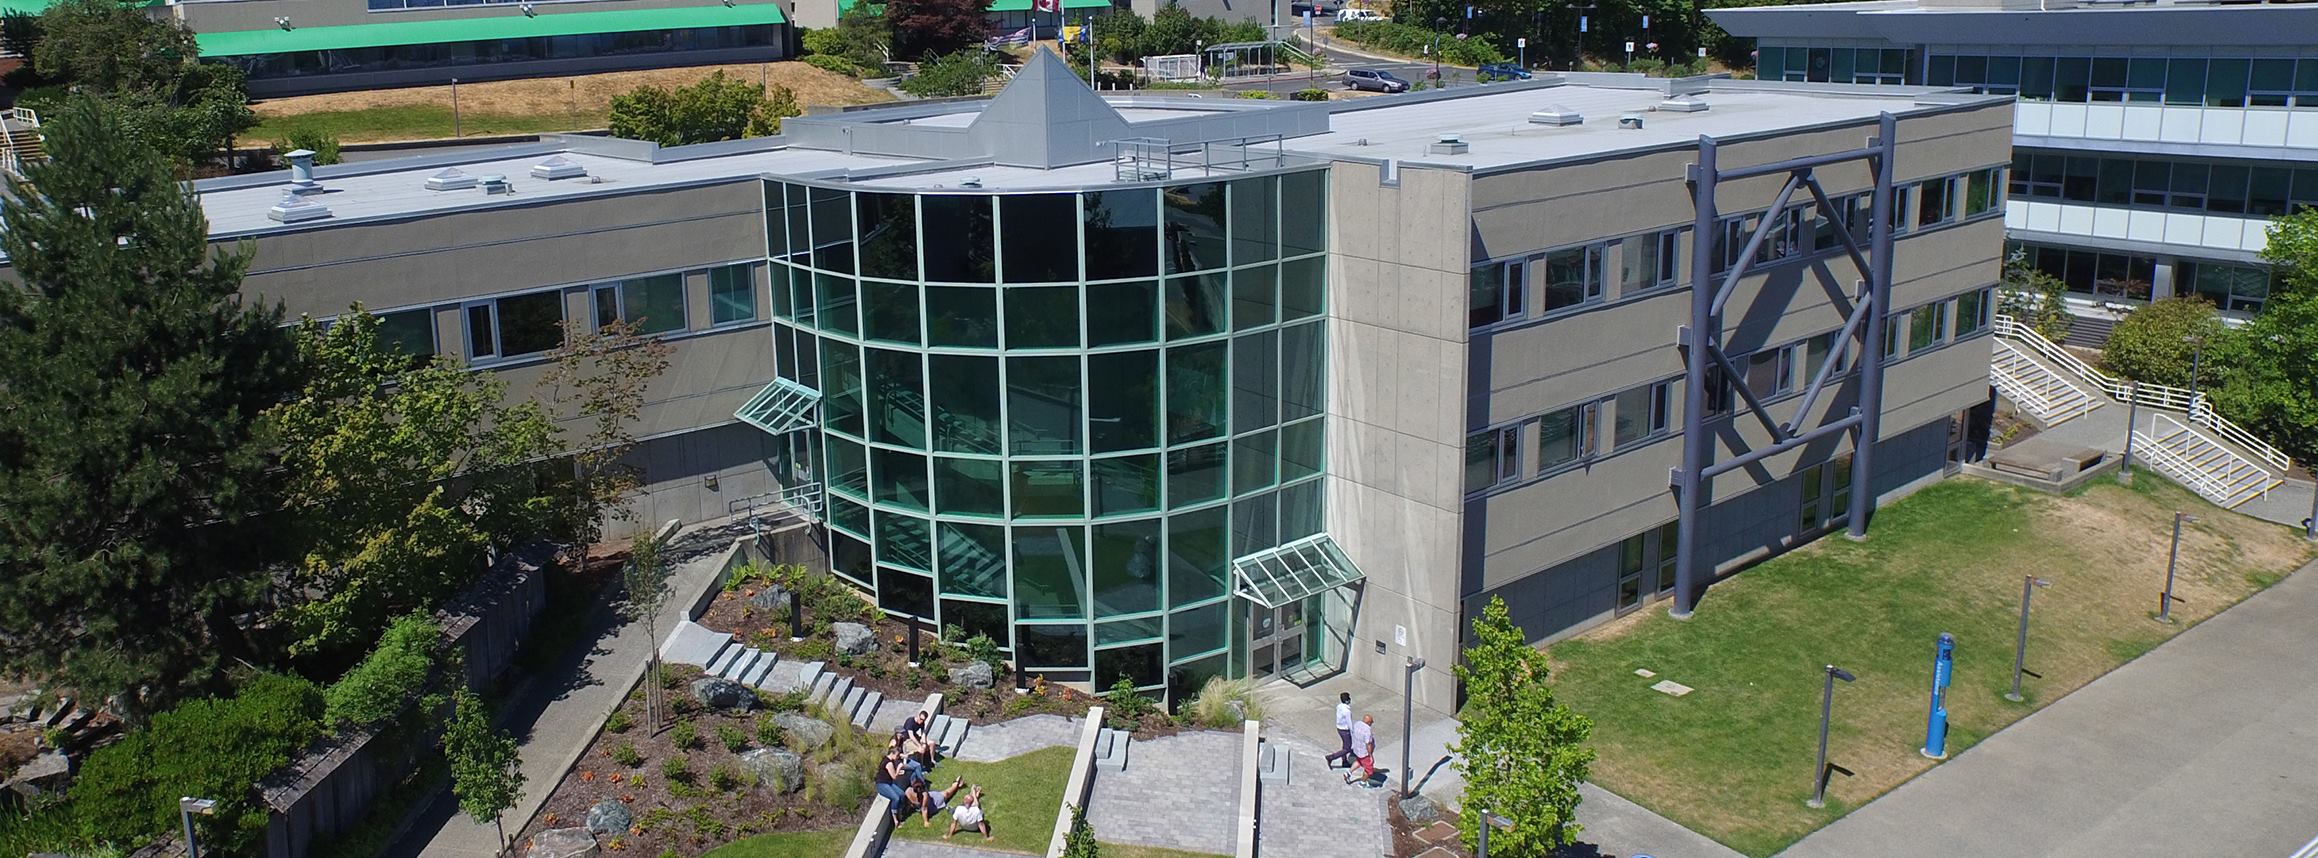 جامعة فانكوفر ايلاند – Vancouver Island University (VIU)